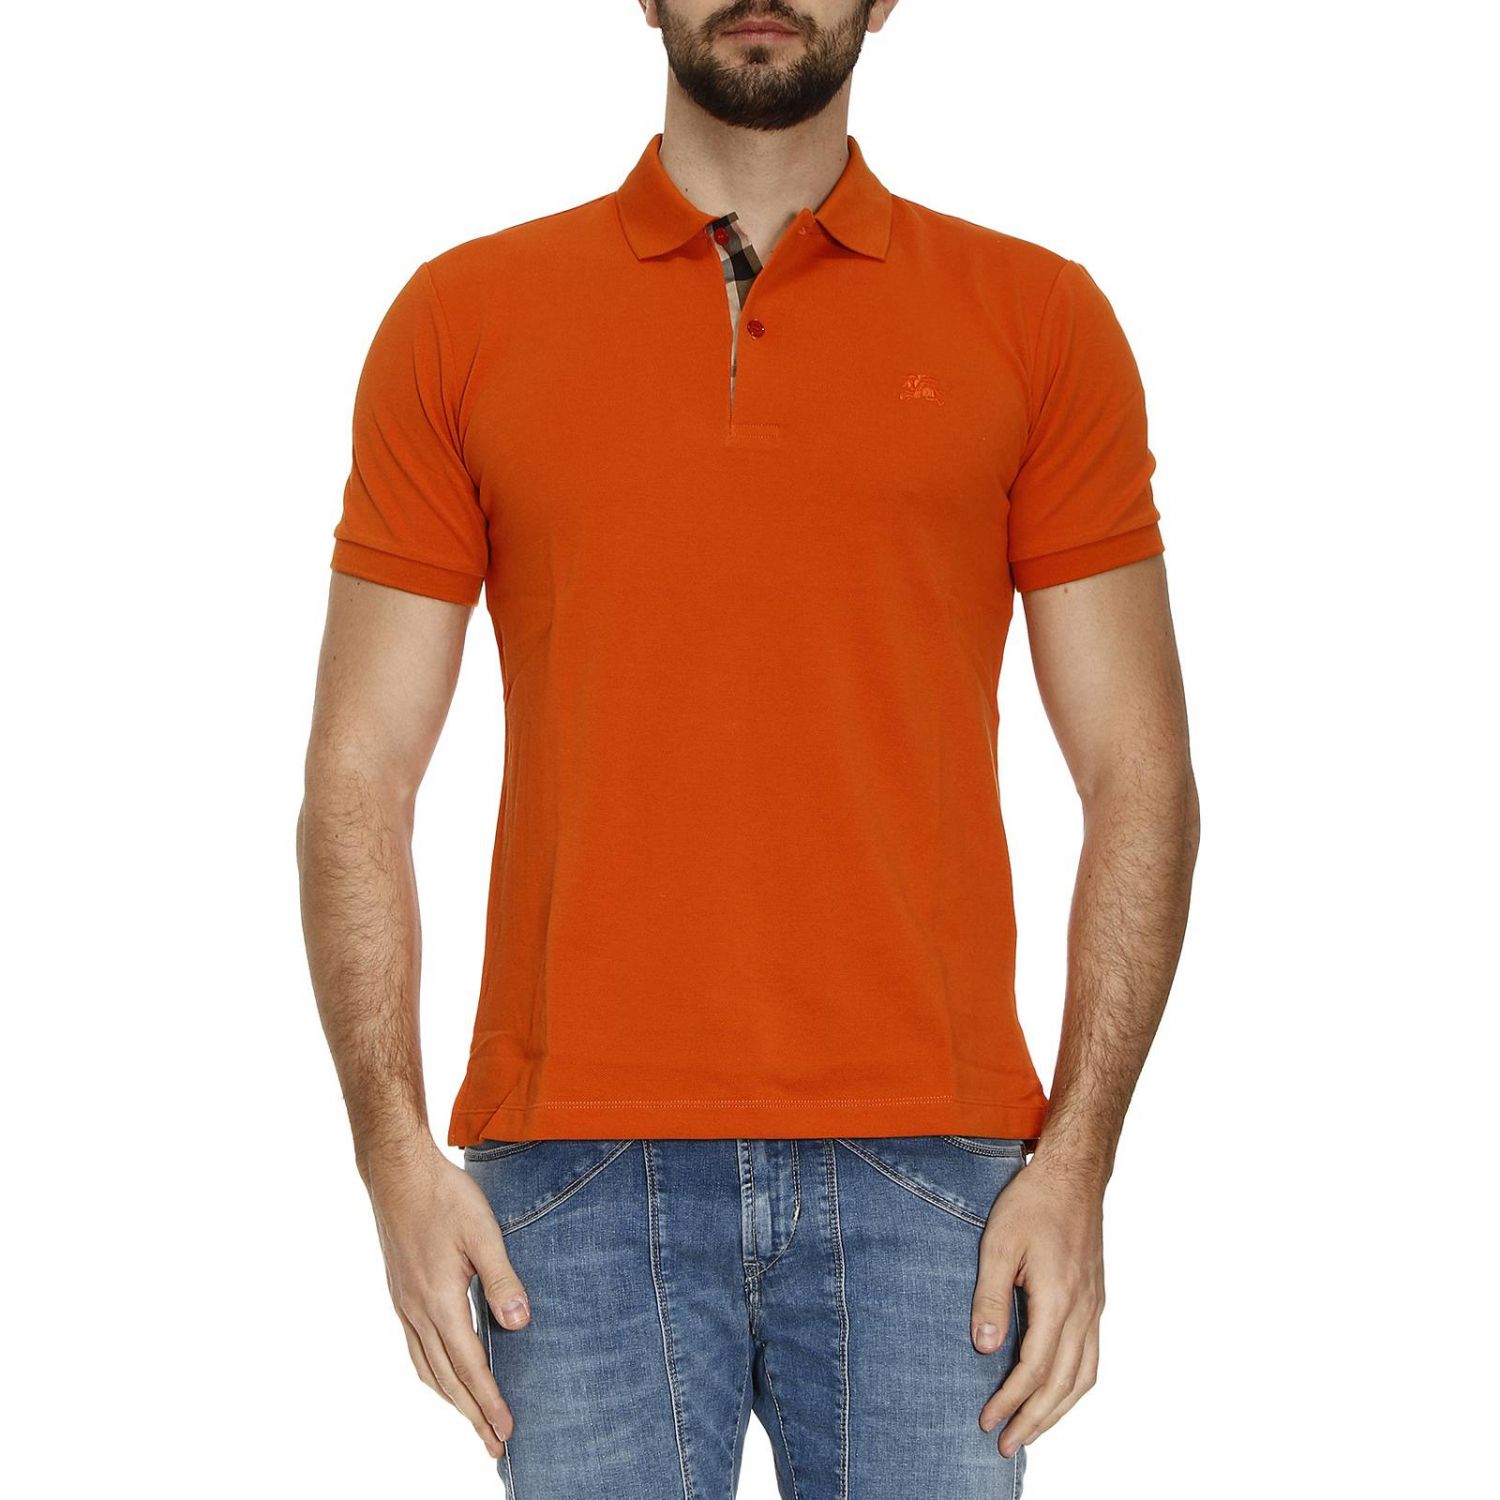 Burberry Outlet: T-shirt men | T-Shirt Burberry Men Orange | T-Shirt ...